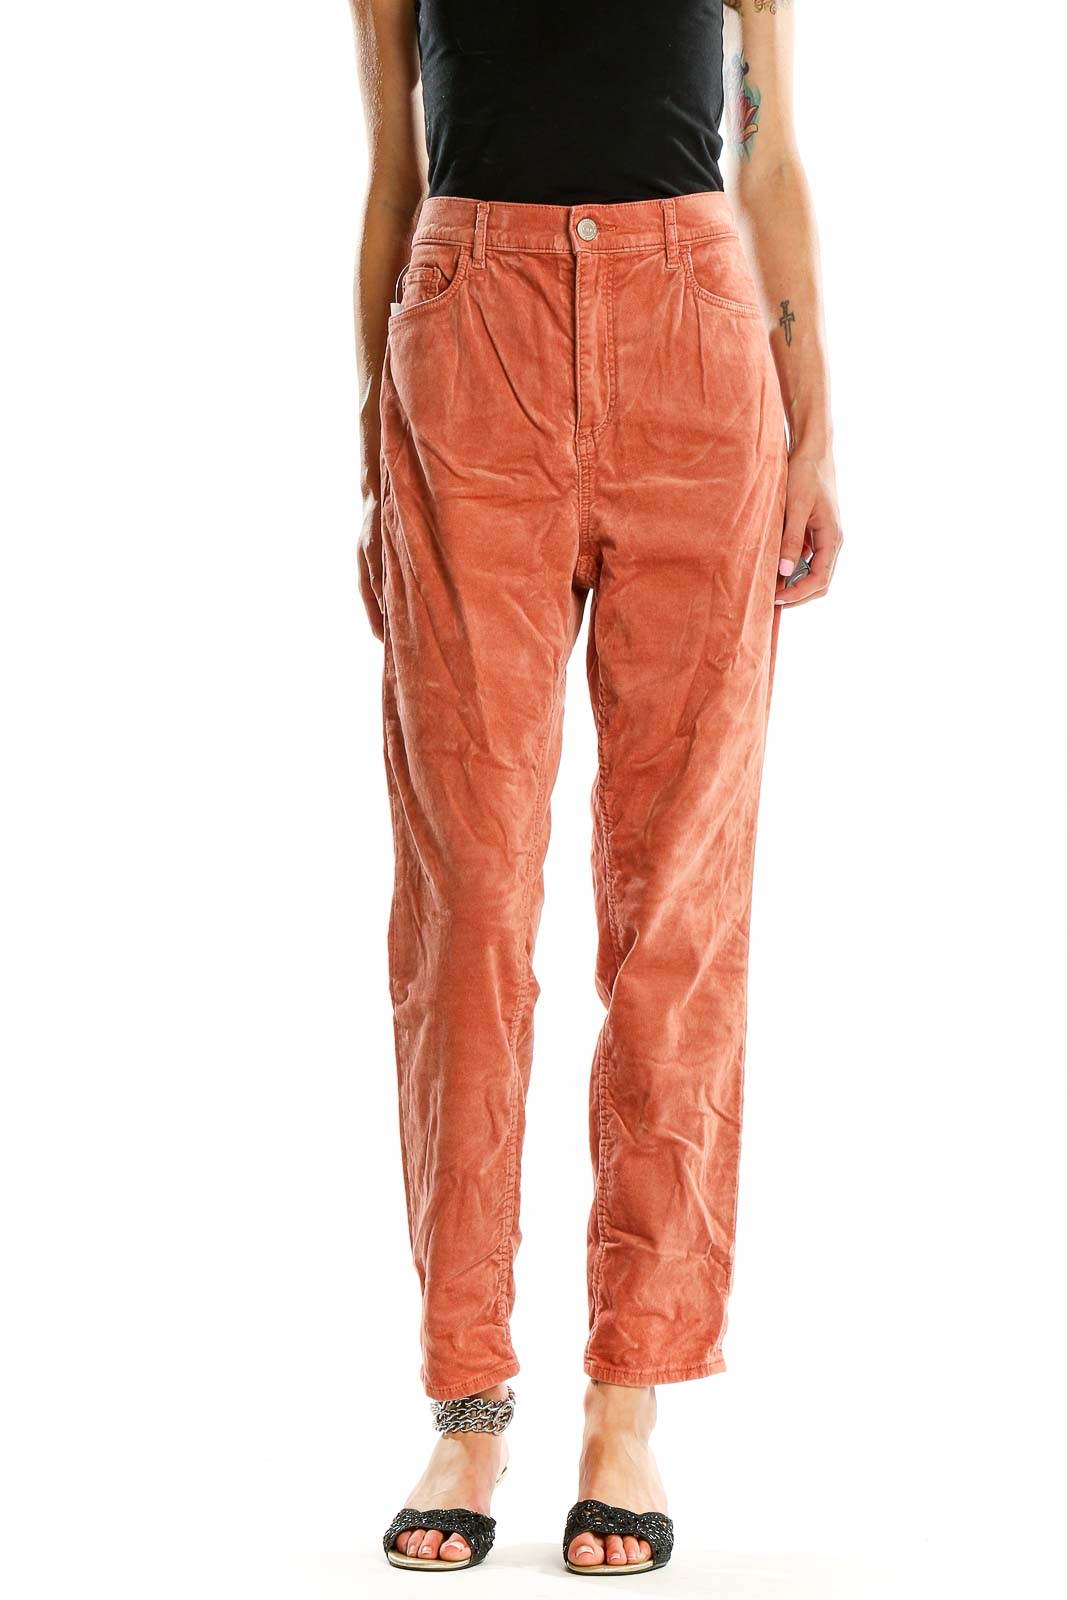 Orange Corduroy Ankle Length Pants Front